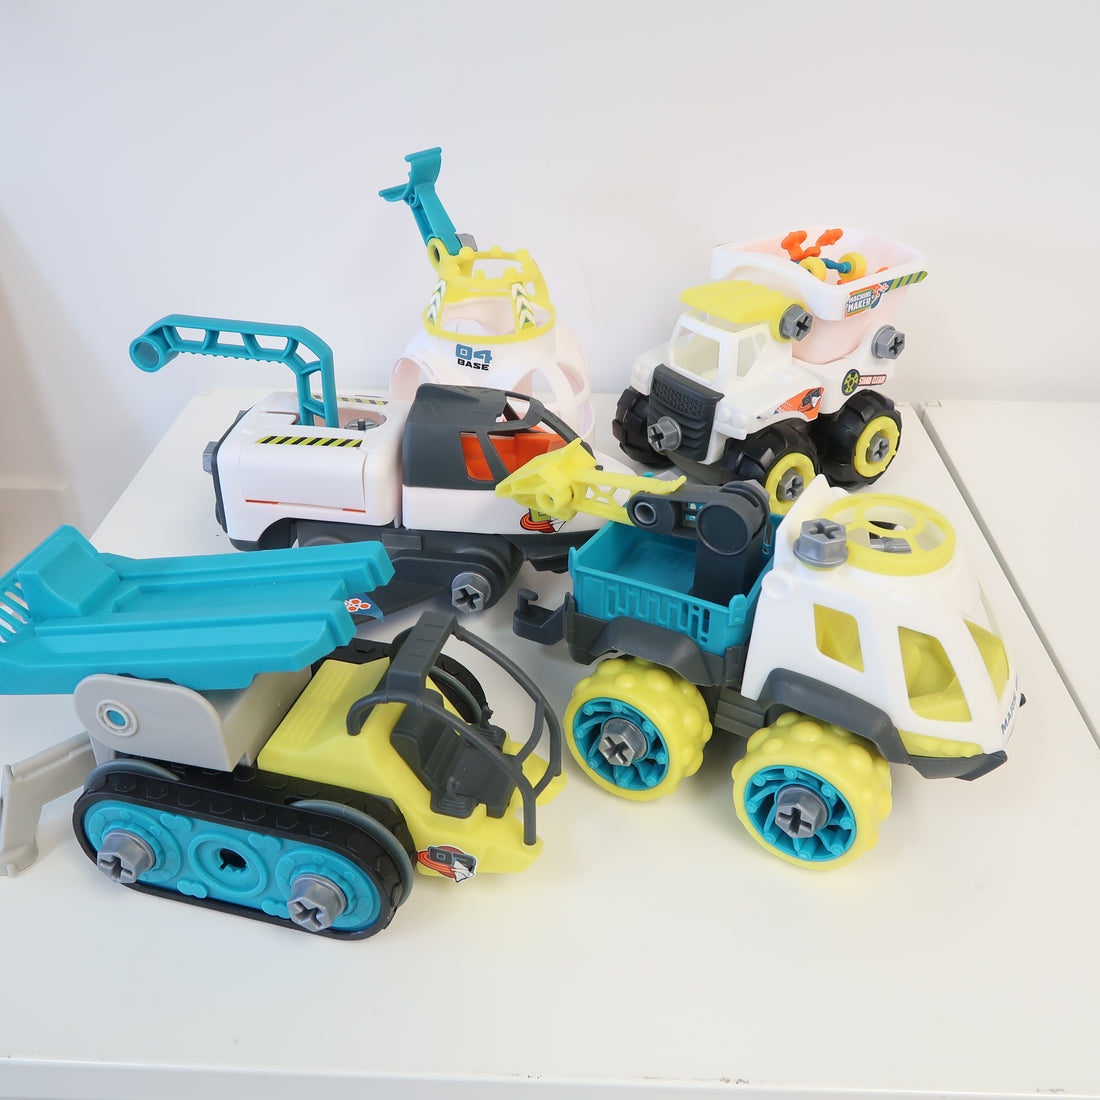 Nikko Toys - Machine Maker Mission to Mars (Toy)